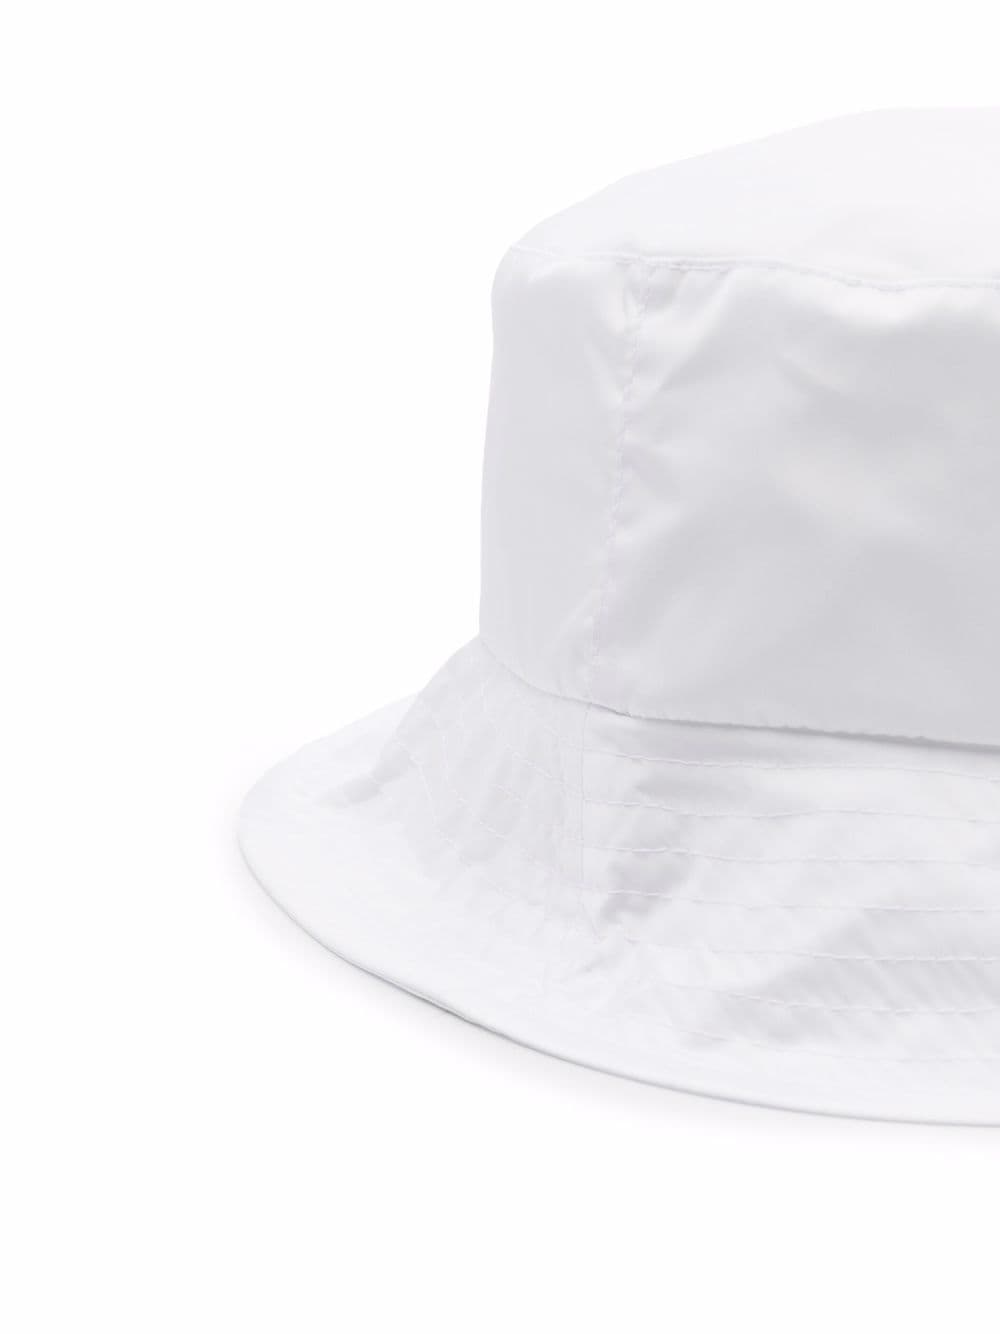 MONCLER - Logo-patch bucket hat